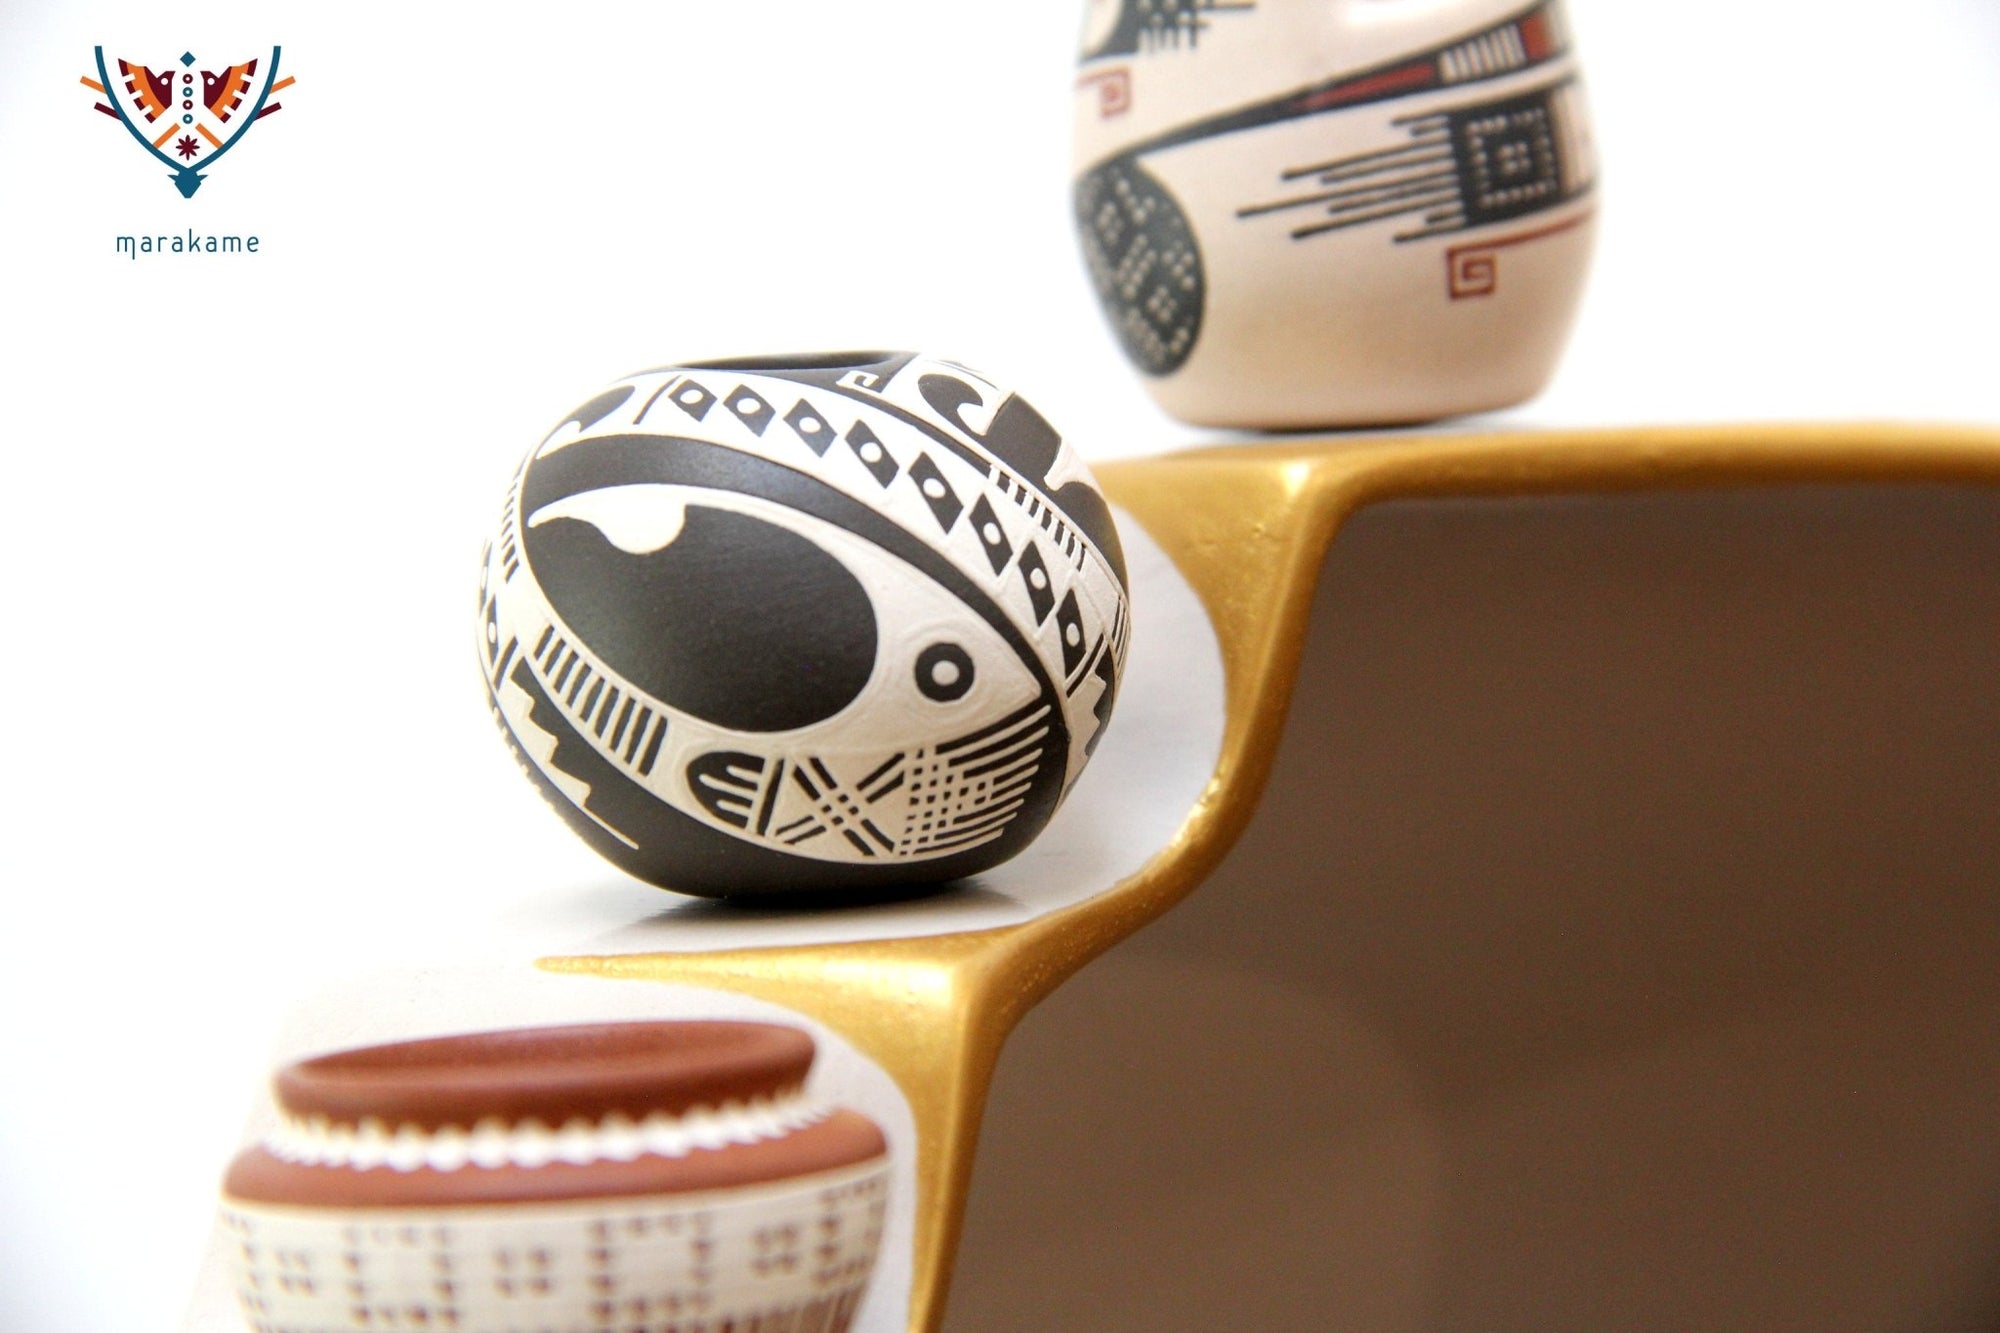 Mata Ortiz Ceramics - Ceramics with Miniatures - Huichol Art - Marakame